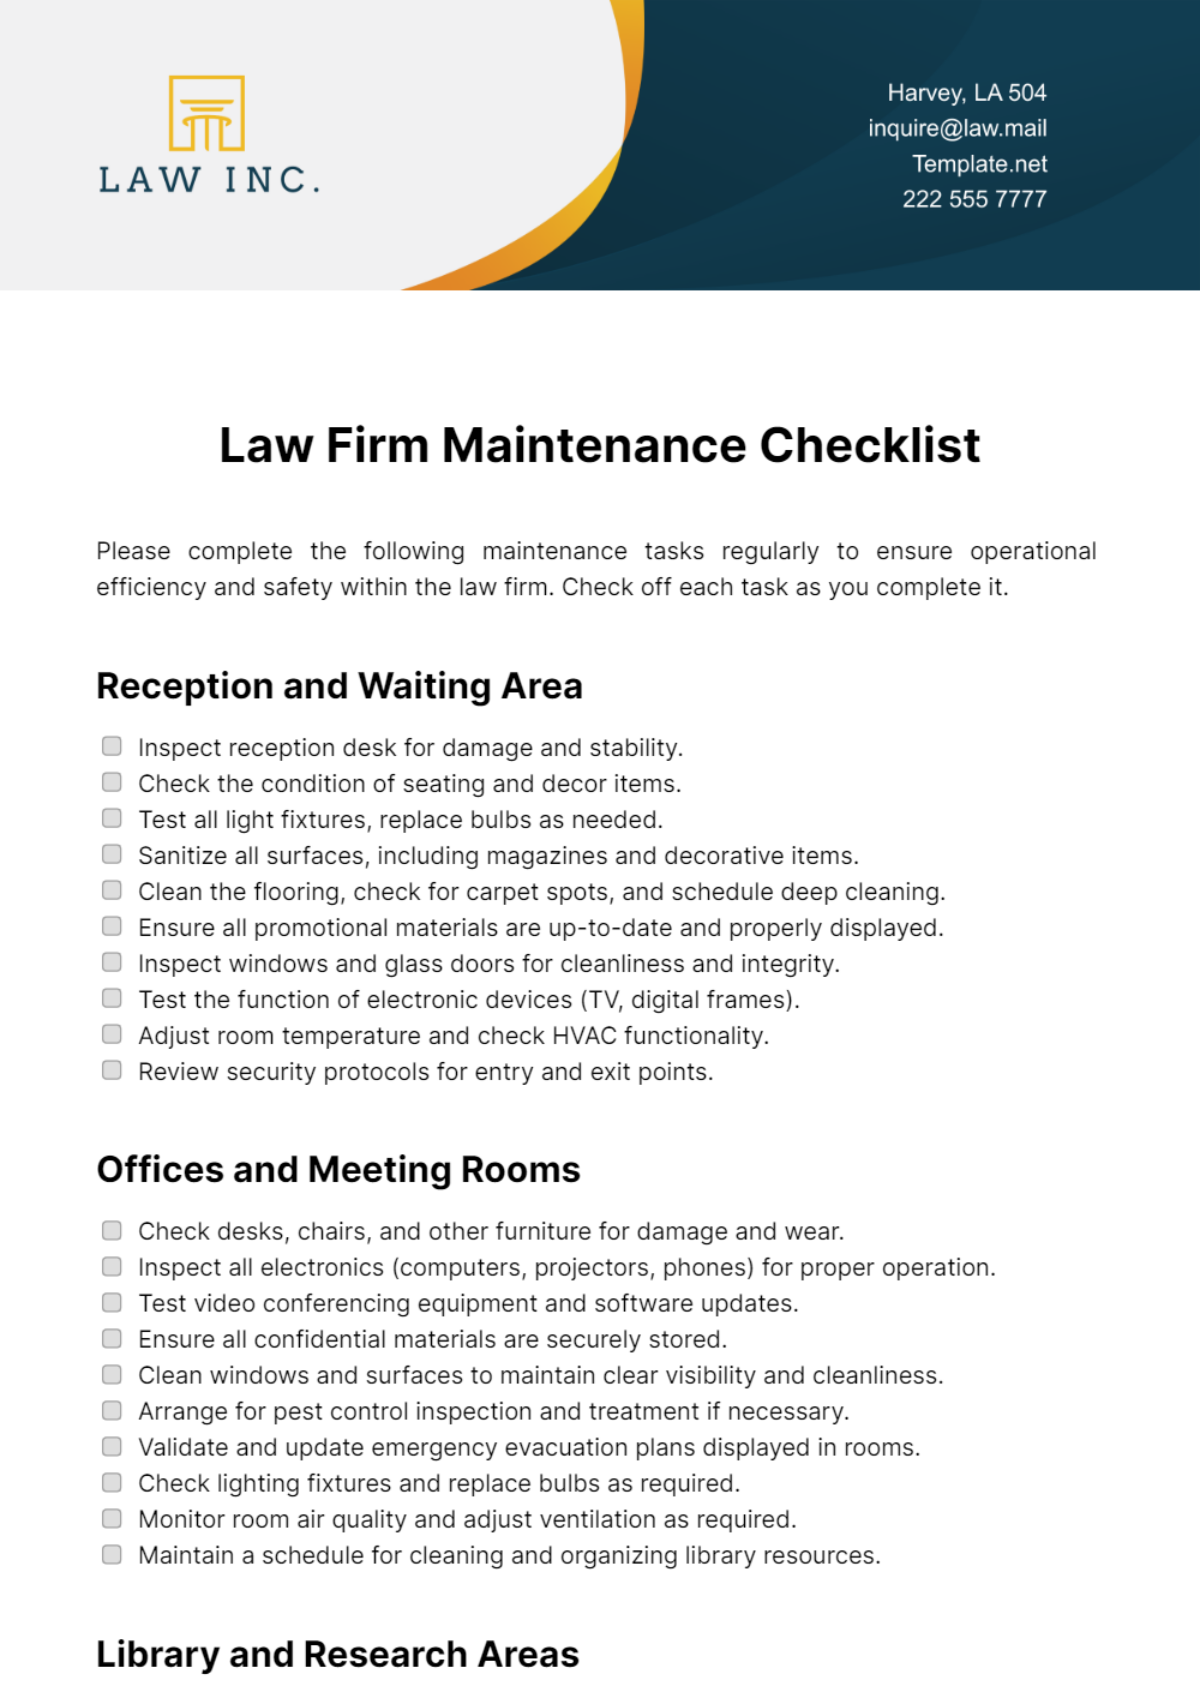 Law Firm Maintenance Checklist Template